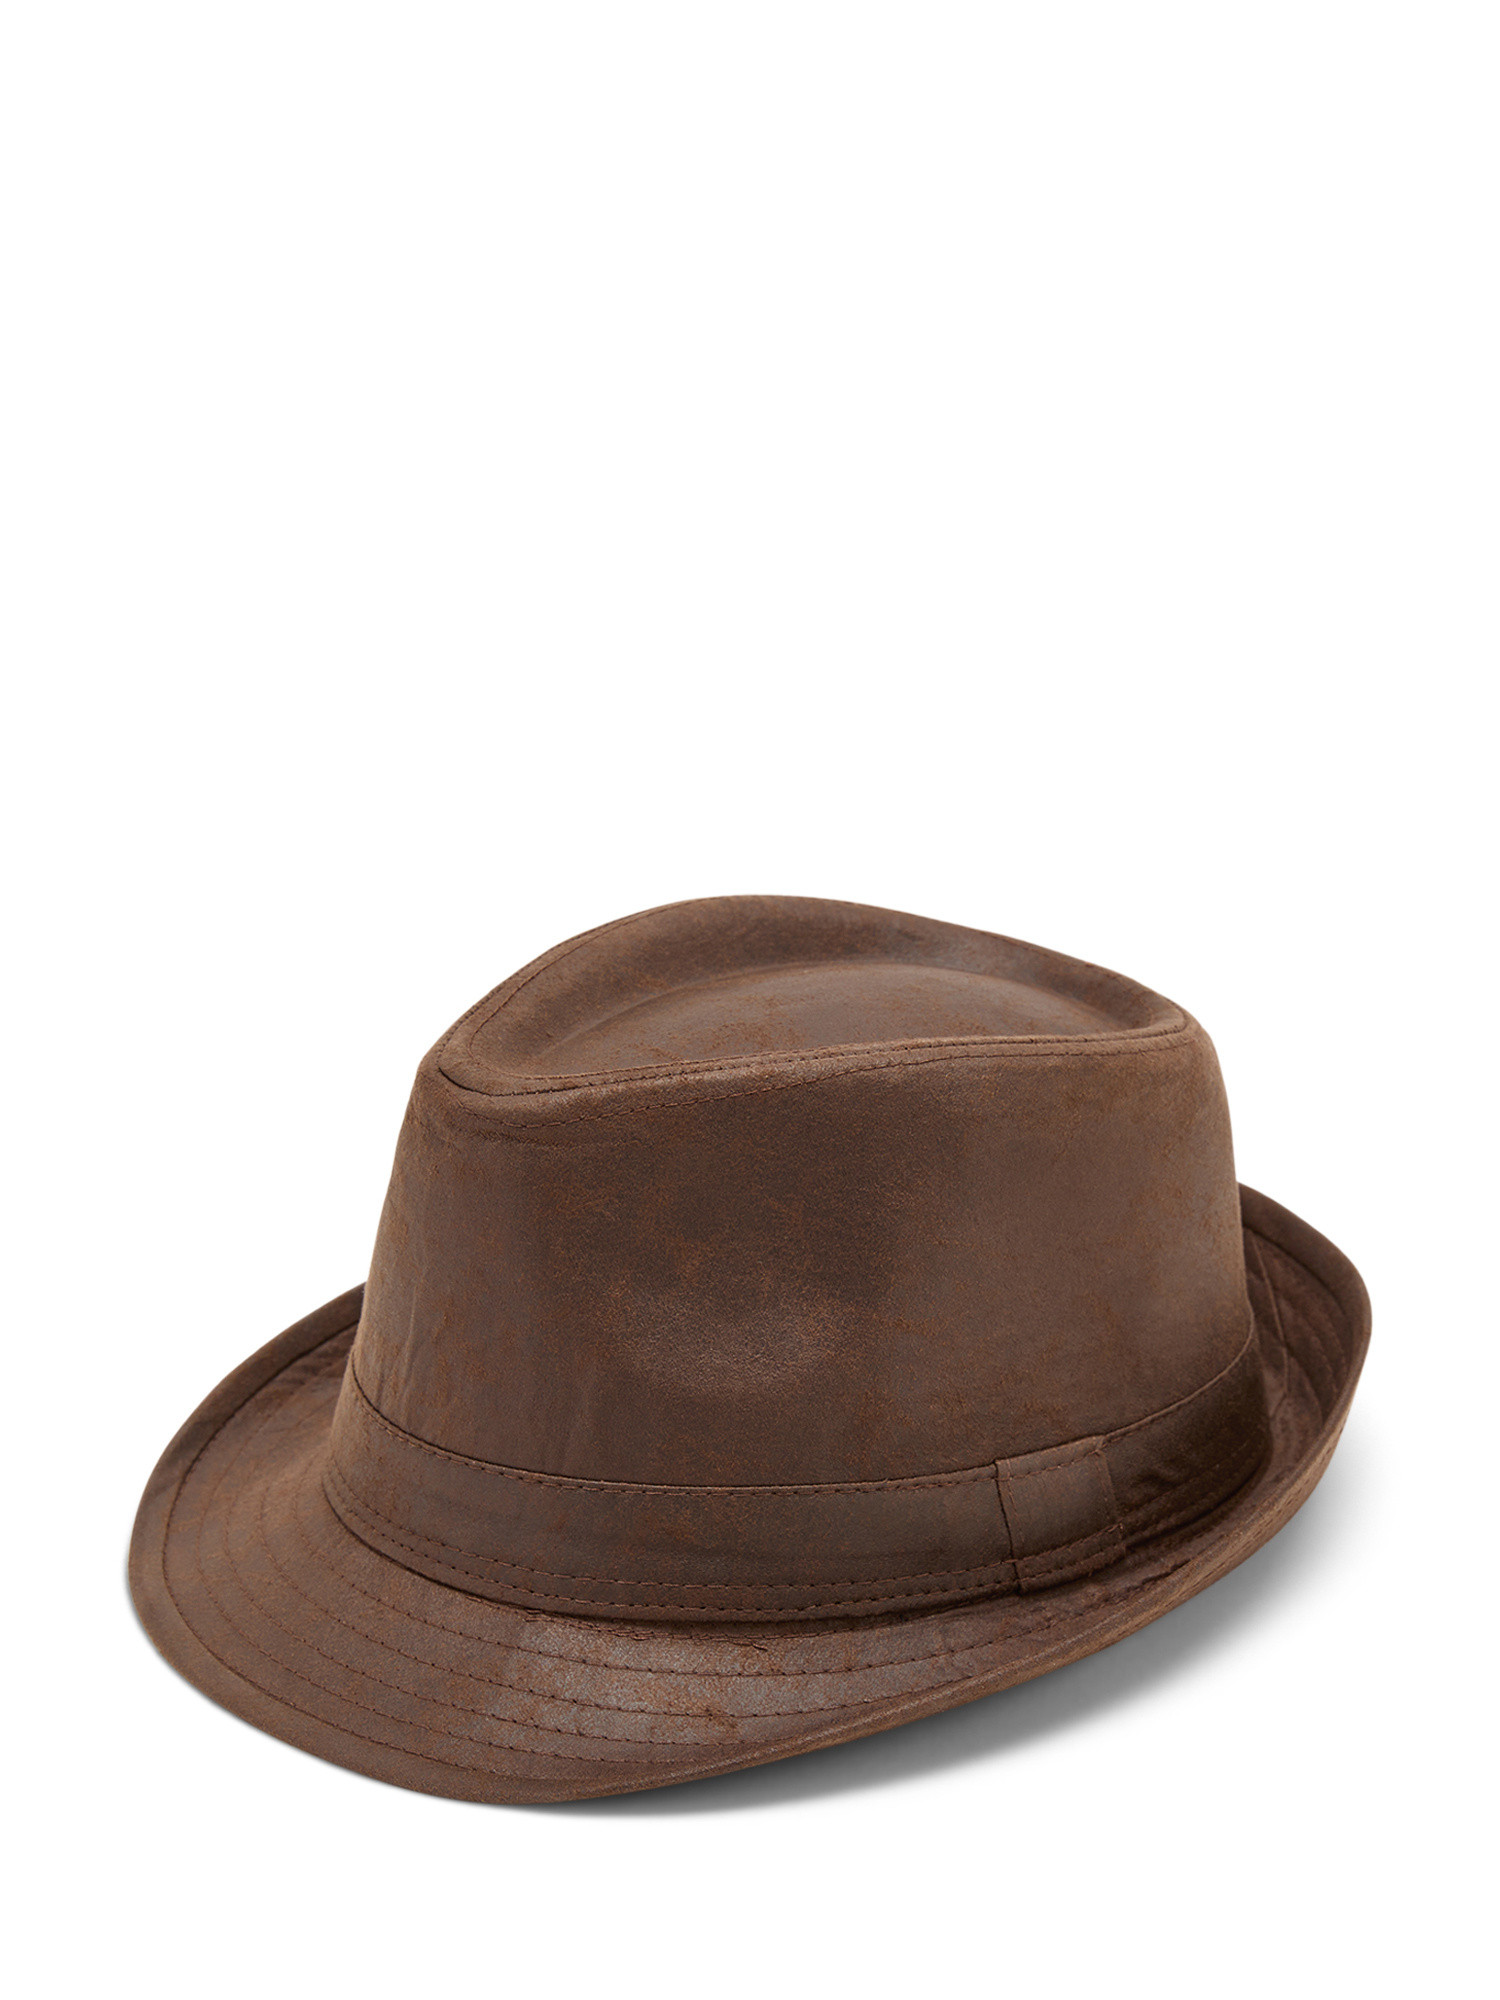 Luca D'Altieri - Alpine hat, Dark Brown, large image number 0